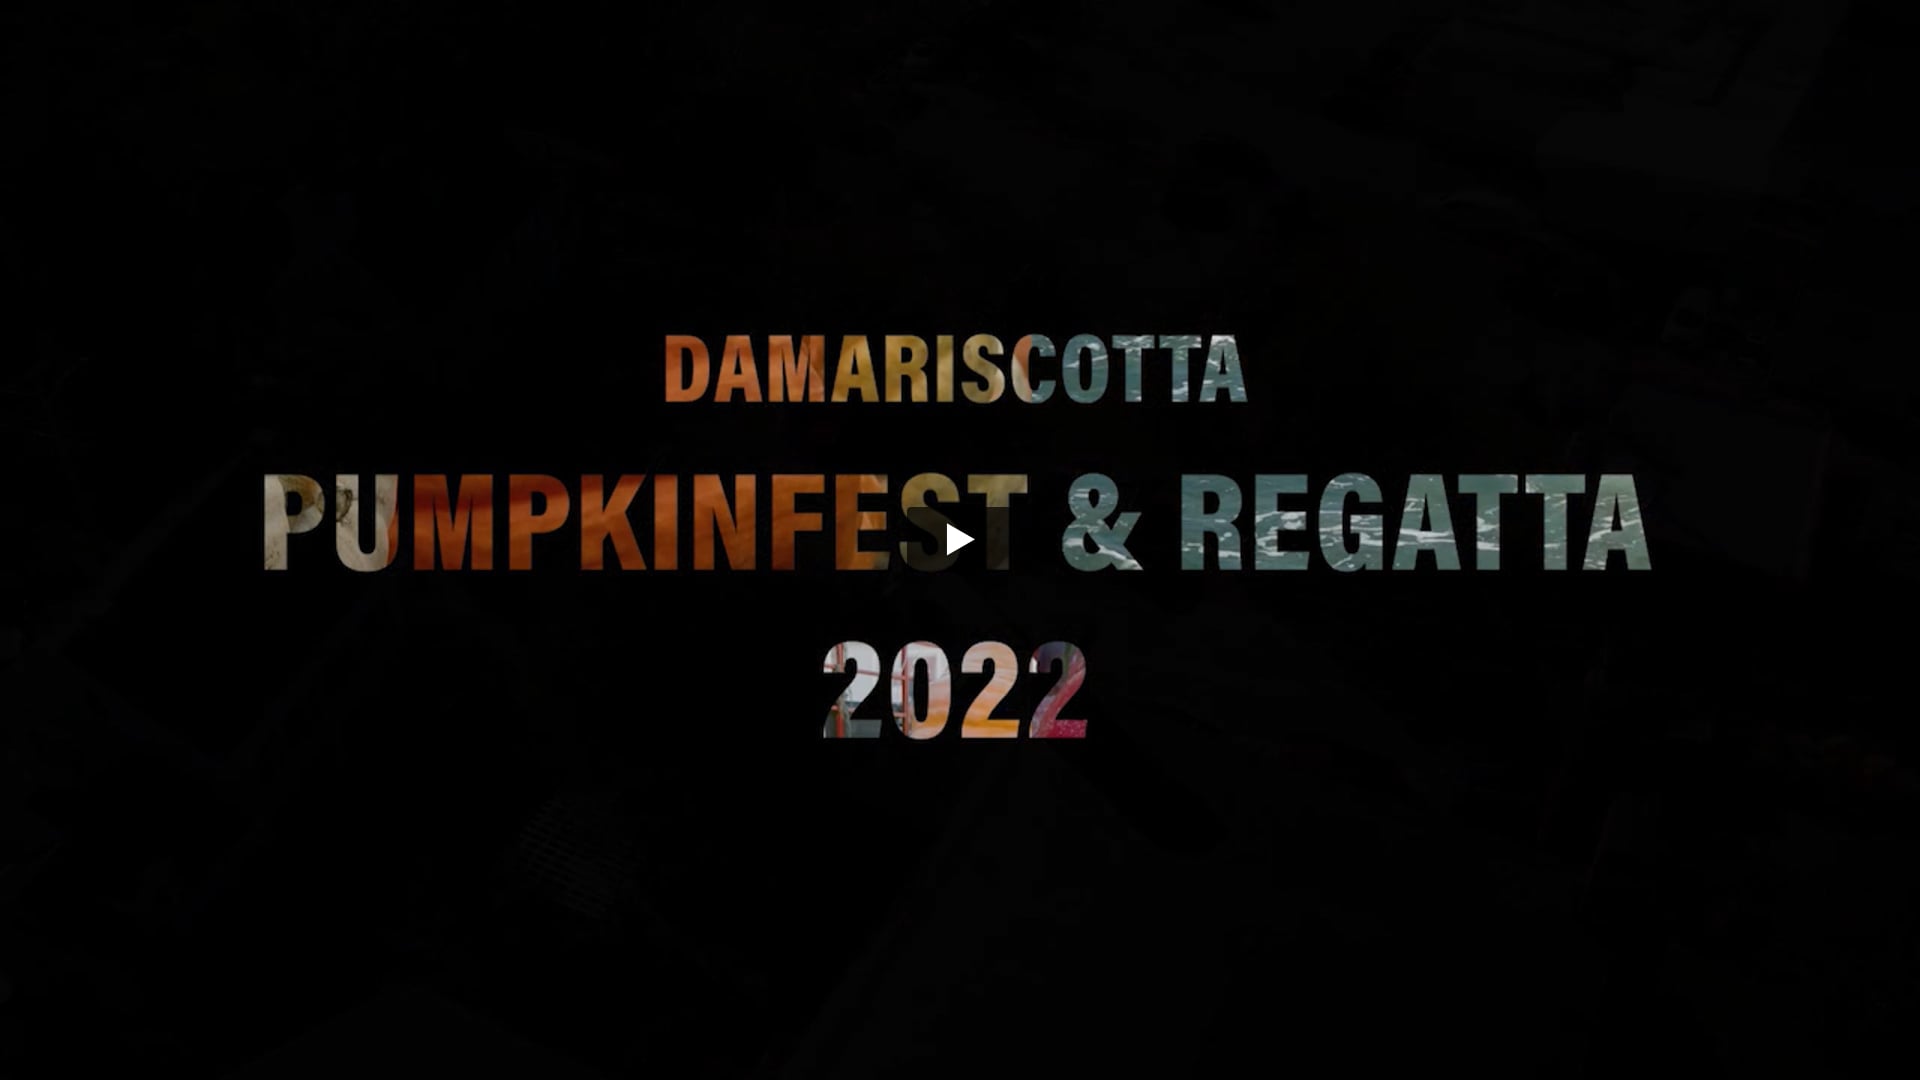 Damariscotta Pumpkinfest and Regatta 2022